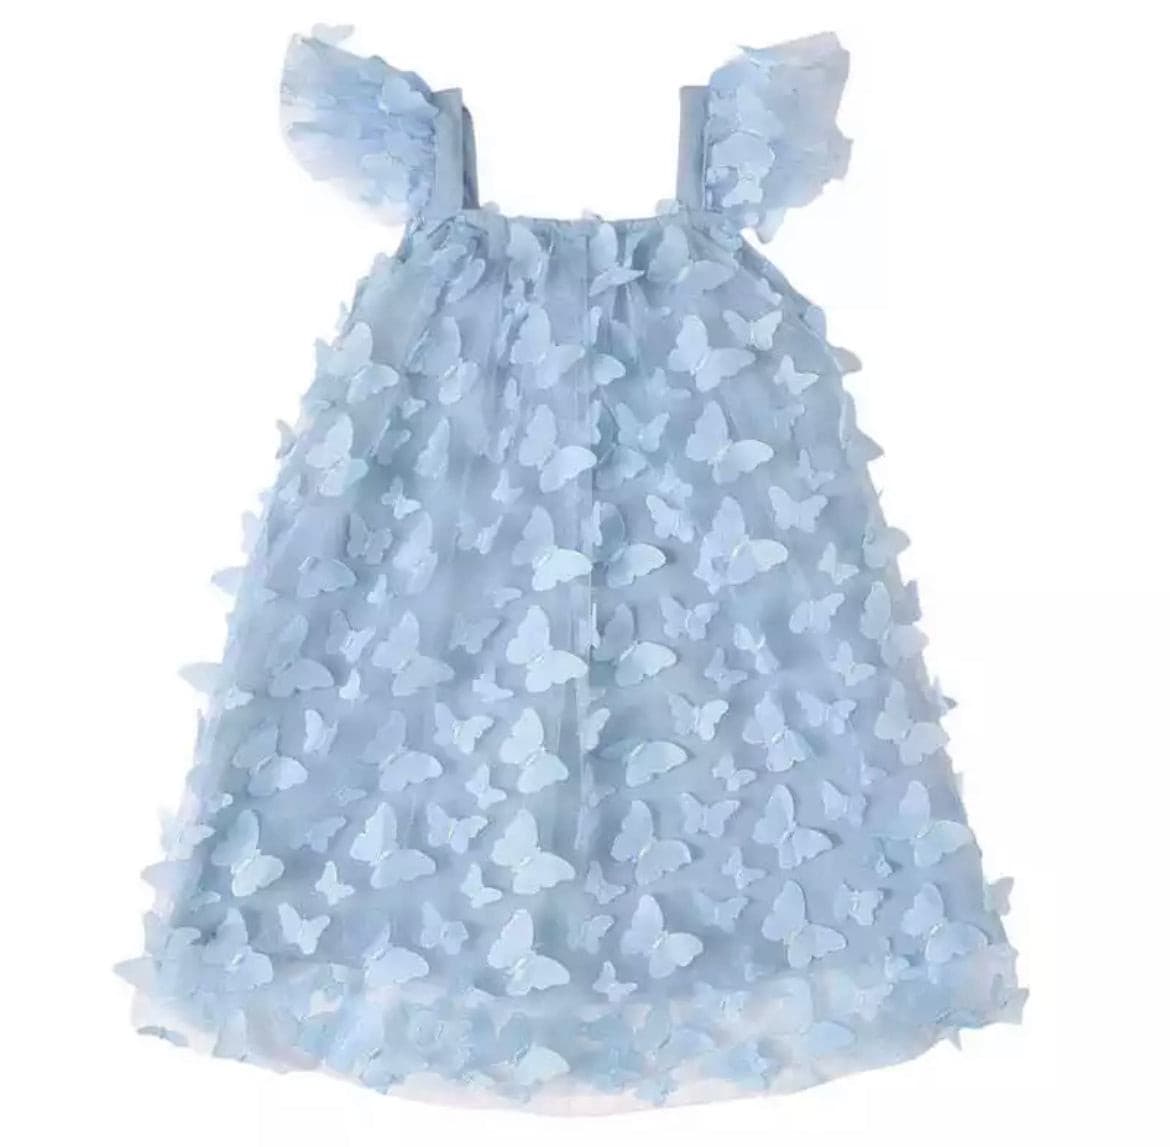 3D Butterfly Dress - Baby Blue.